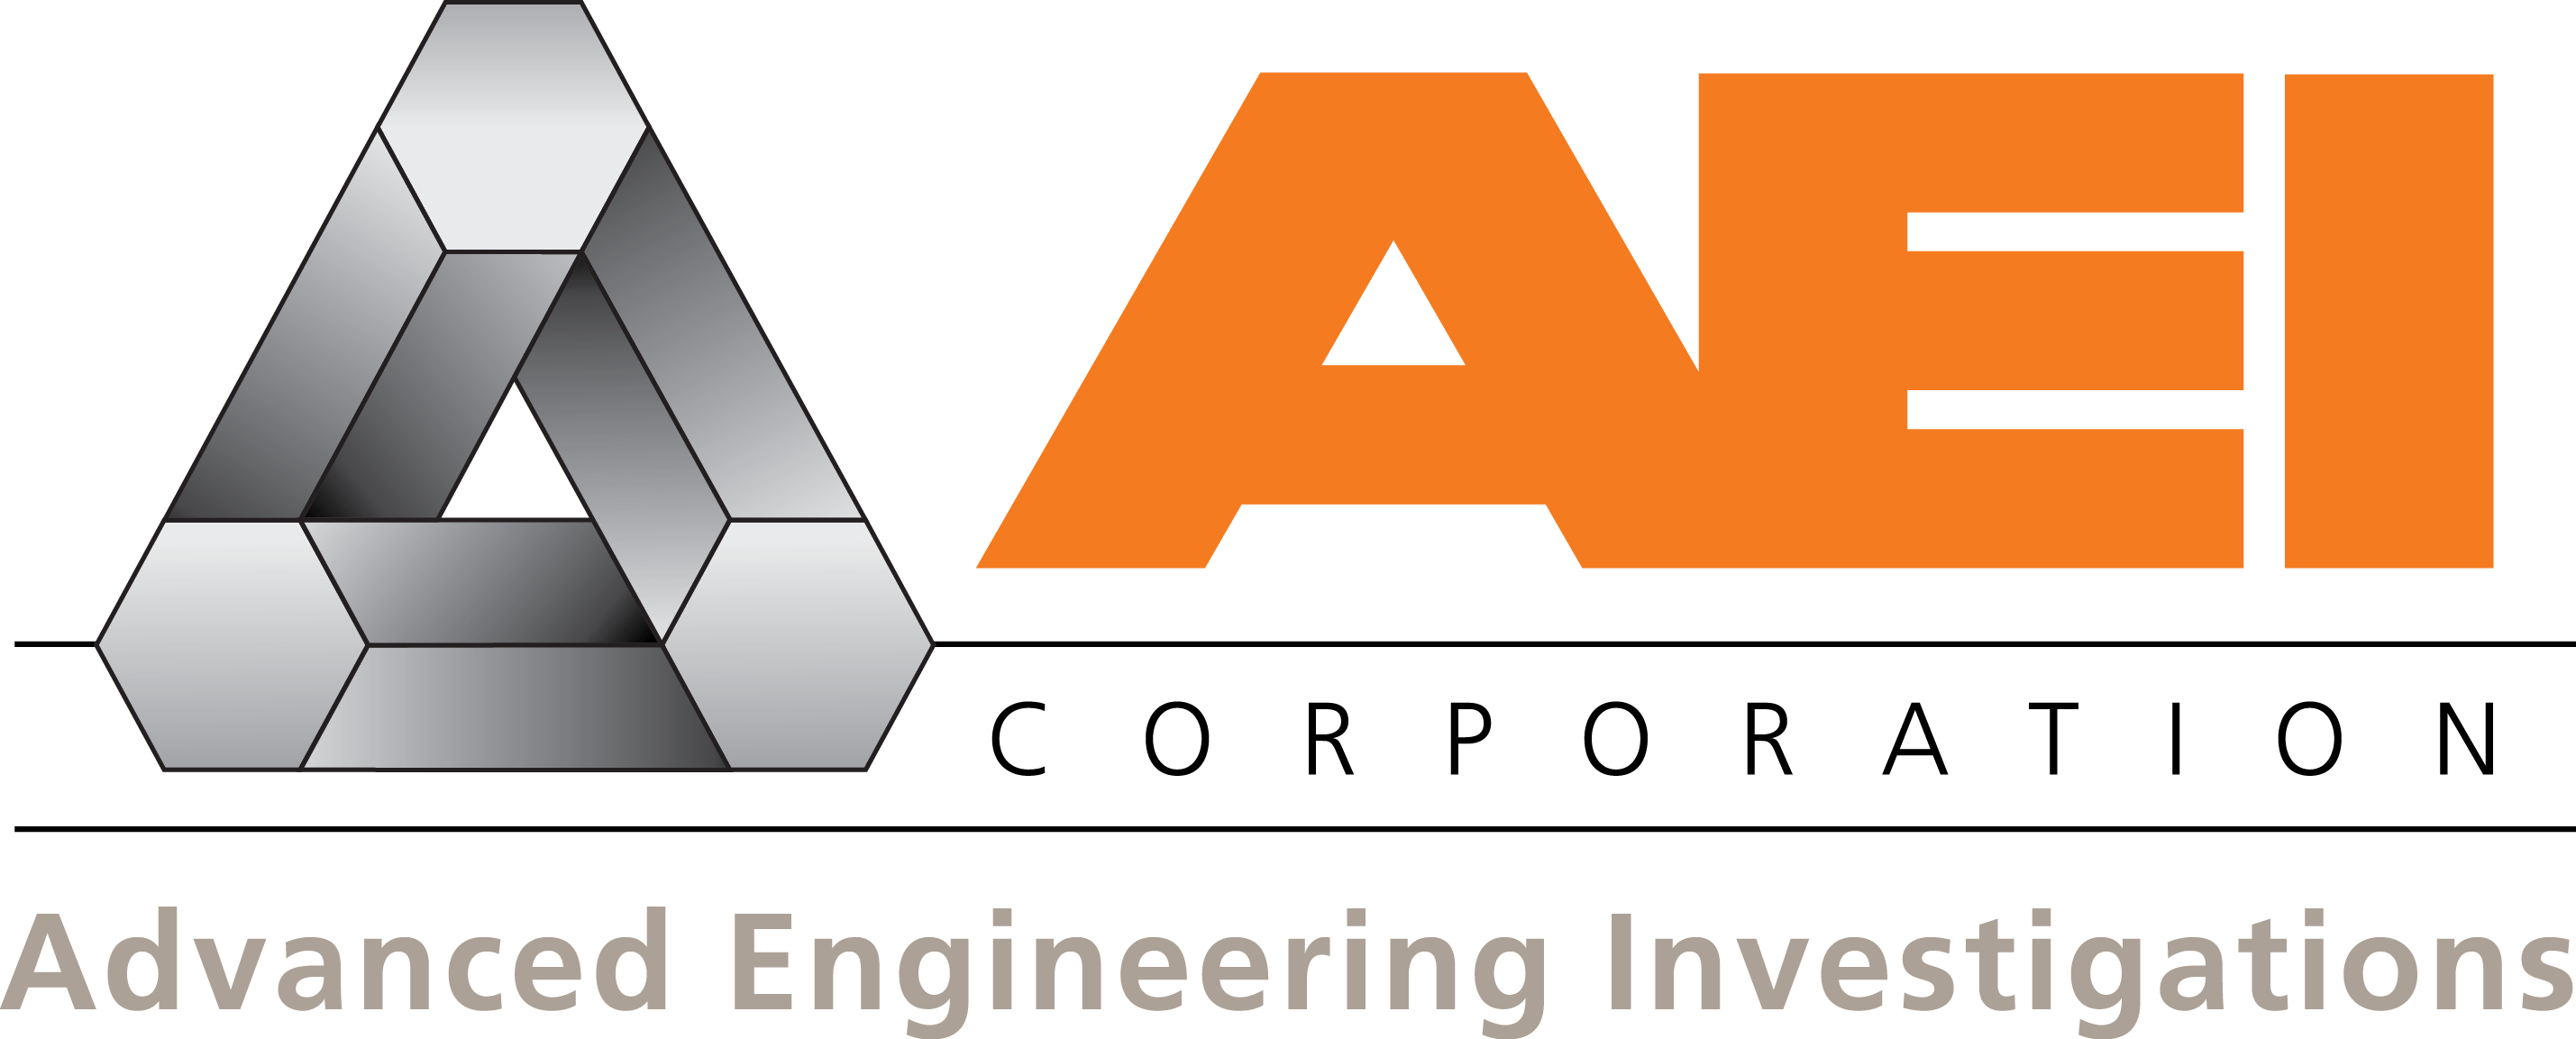 AEI Corporation Advanced Engineering Investigations